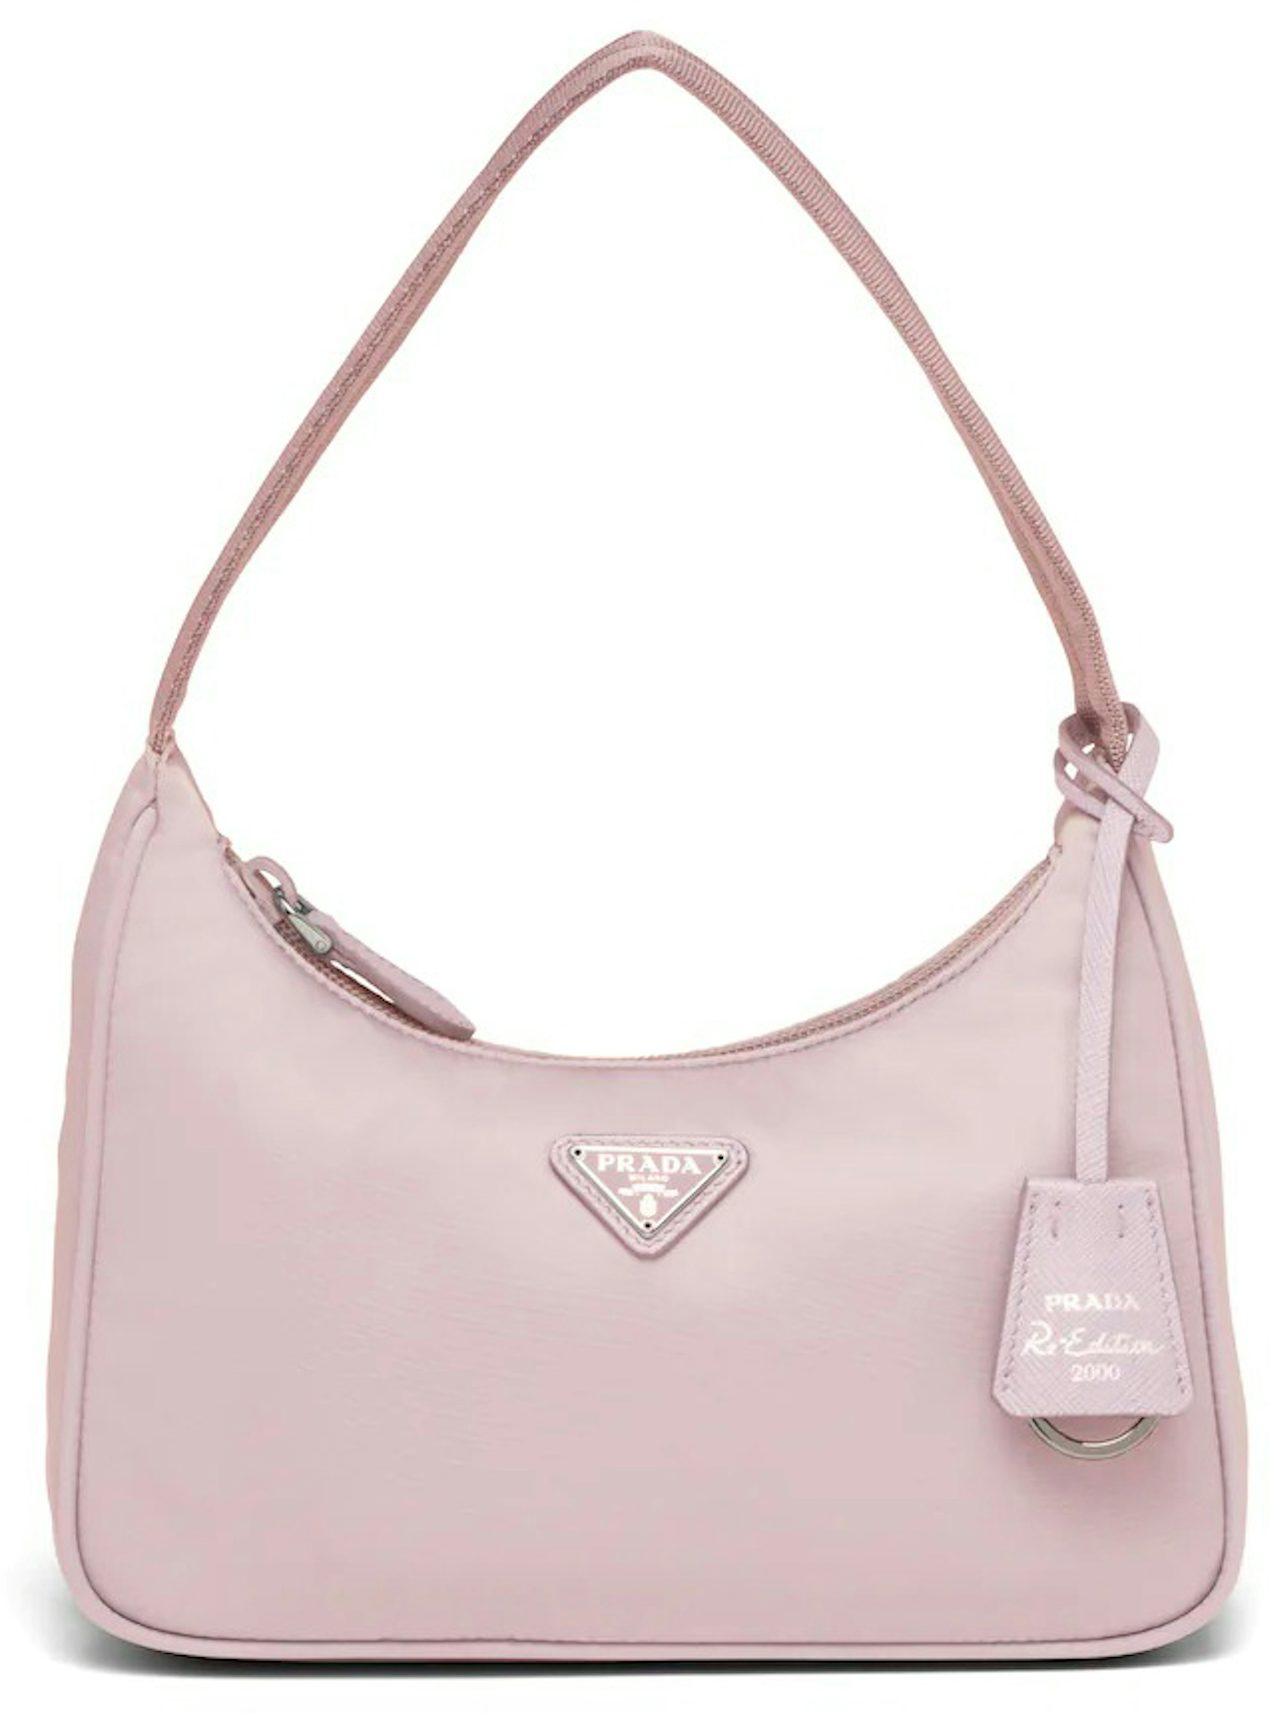 Prada Re-edition 2000 Shoulder Bag in Pink